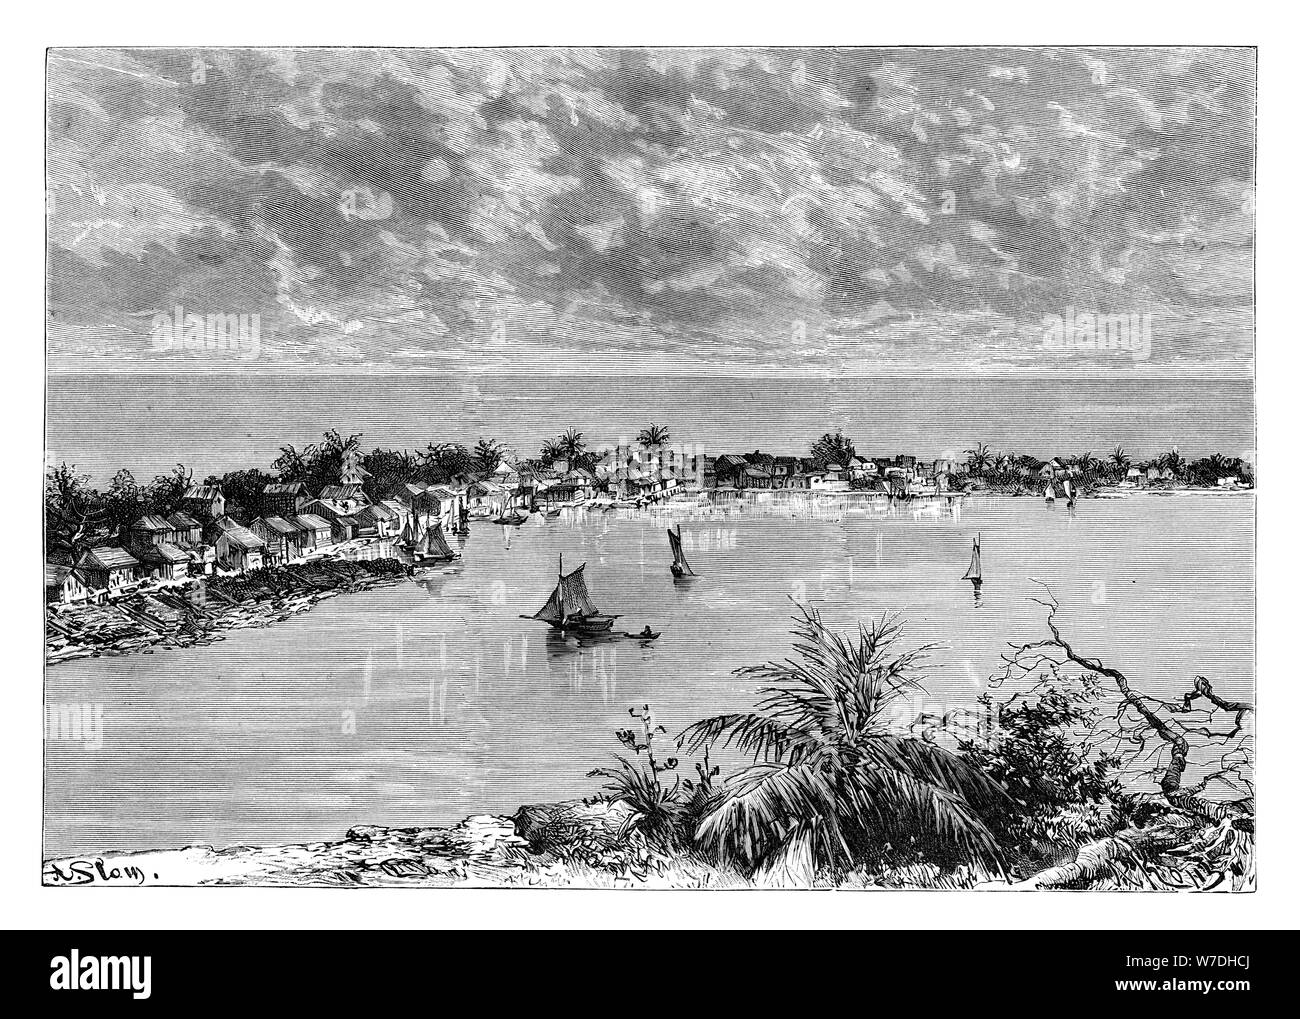 Allgemeine Ansicht in Hopetown, Abaco, c 1890. Artist: Kohl Stockfoto